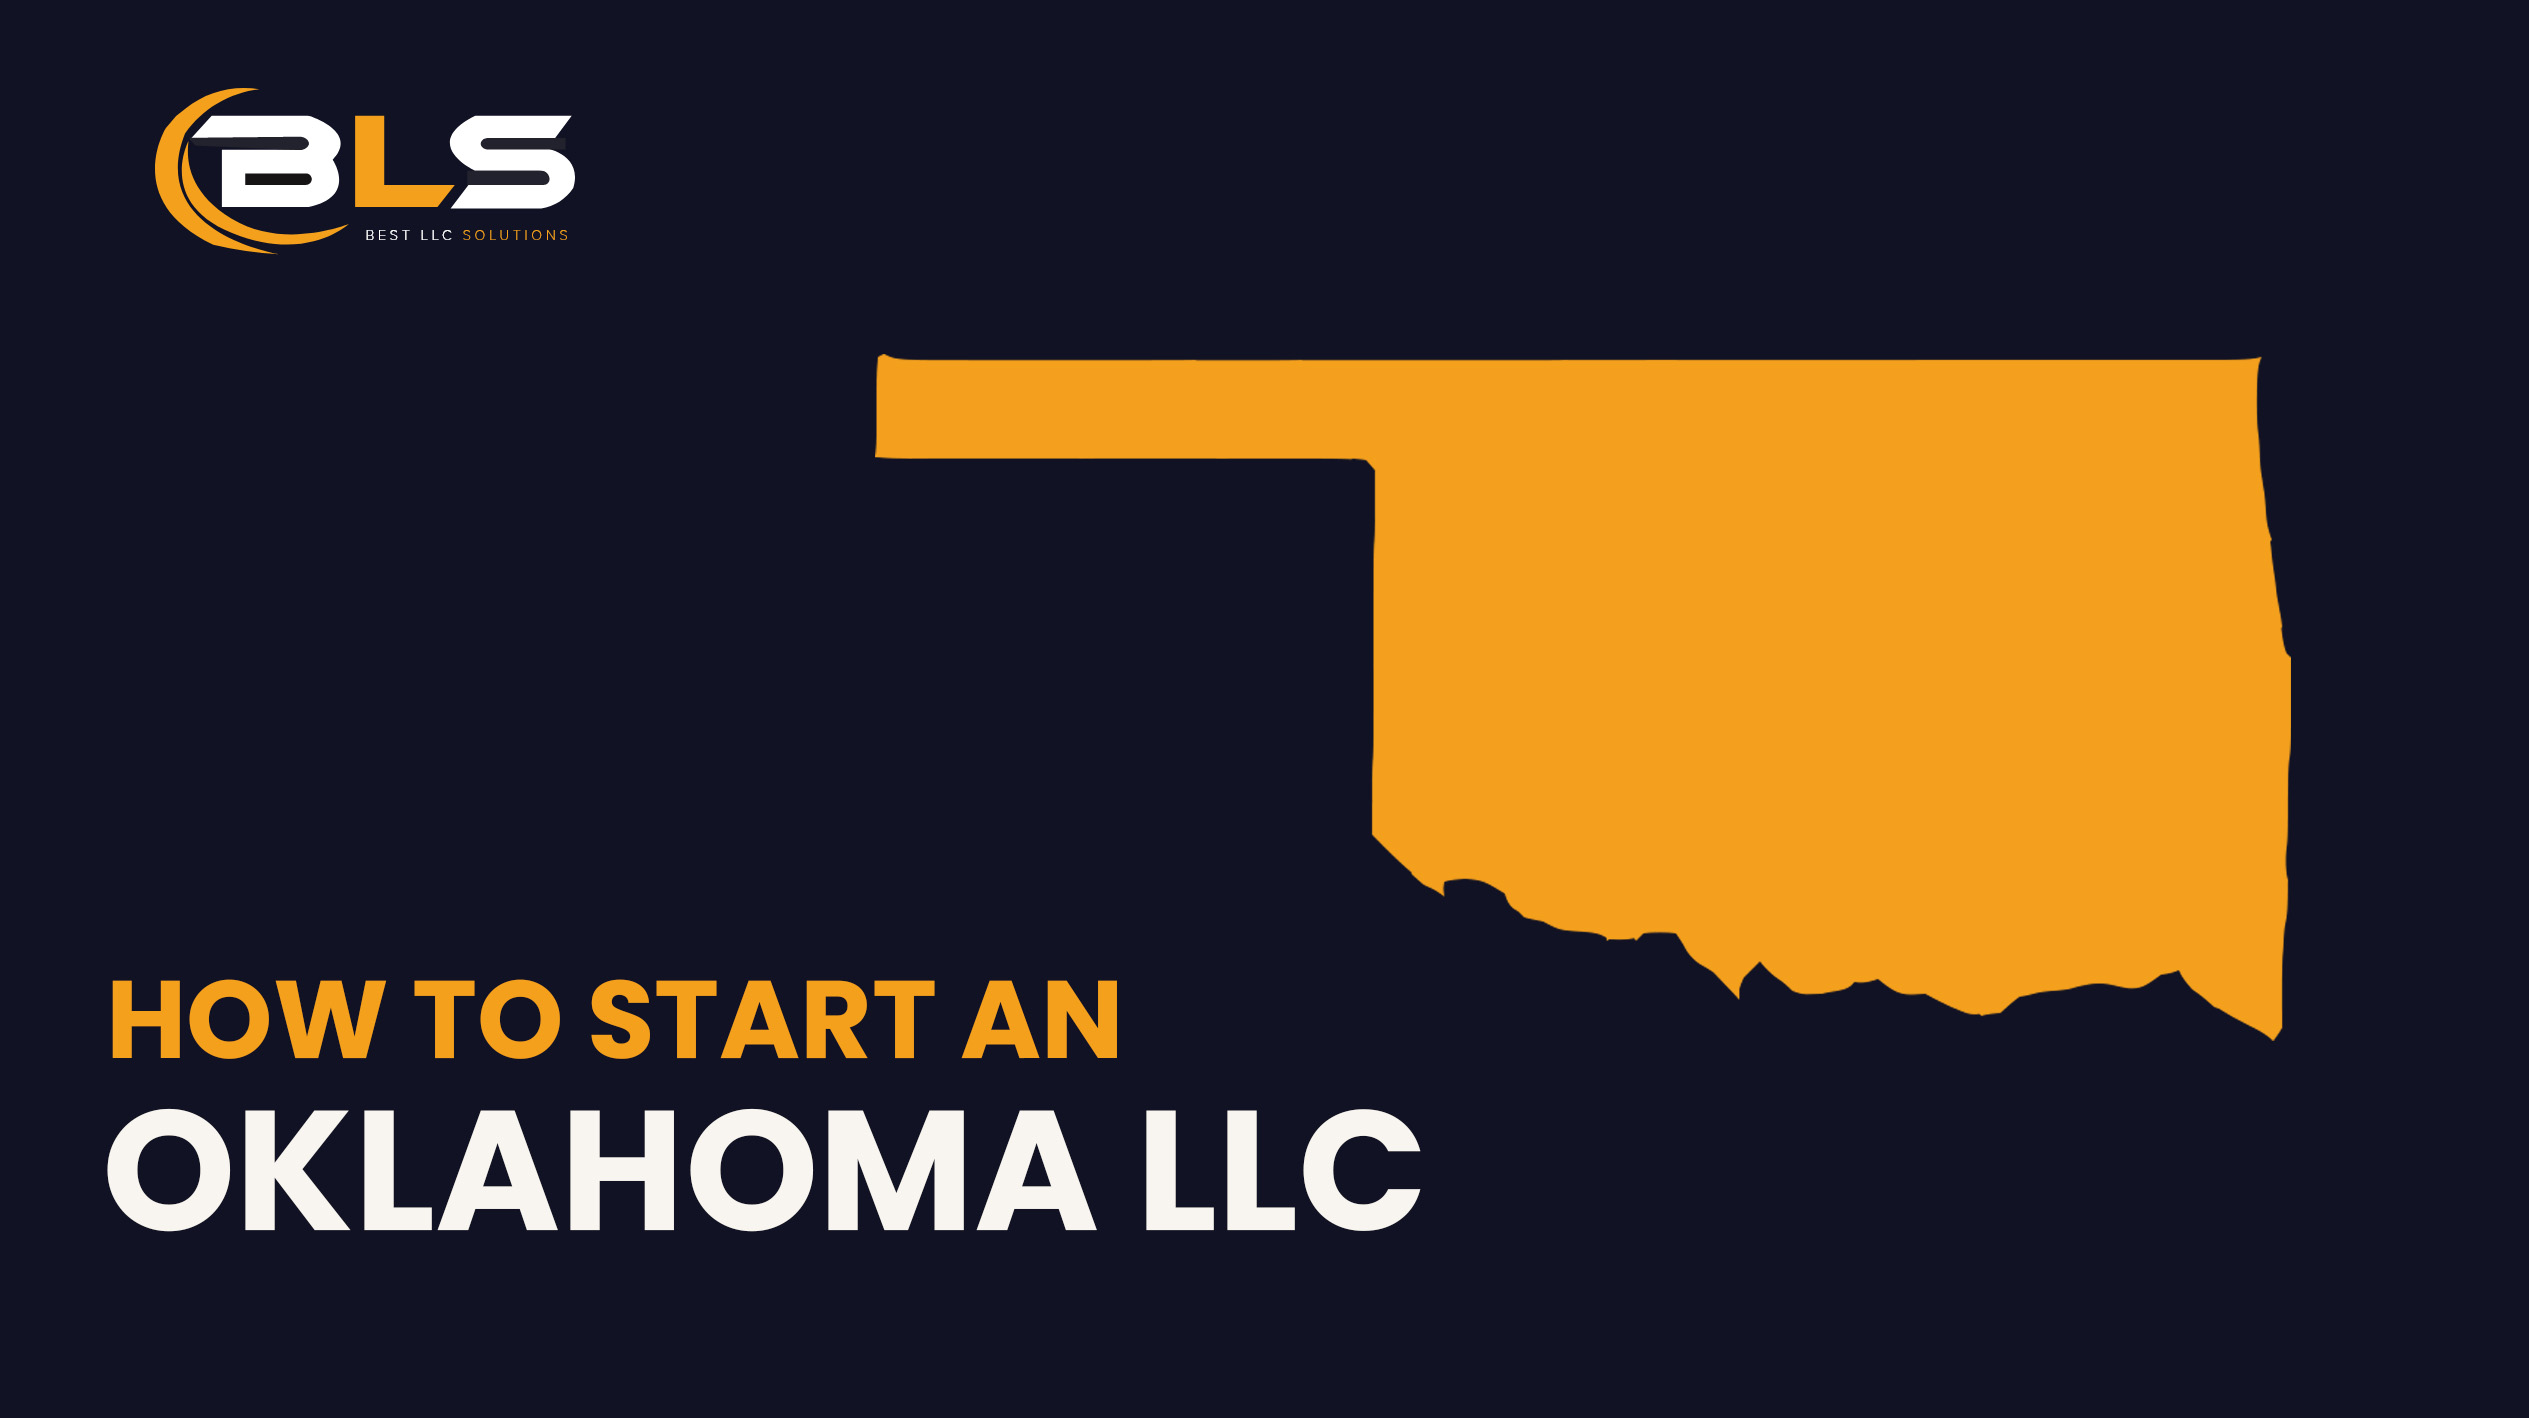 Oklahoma LLC